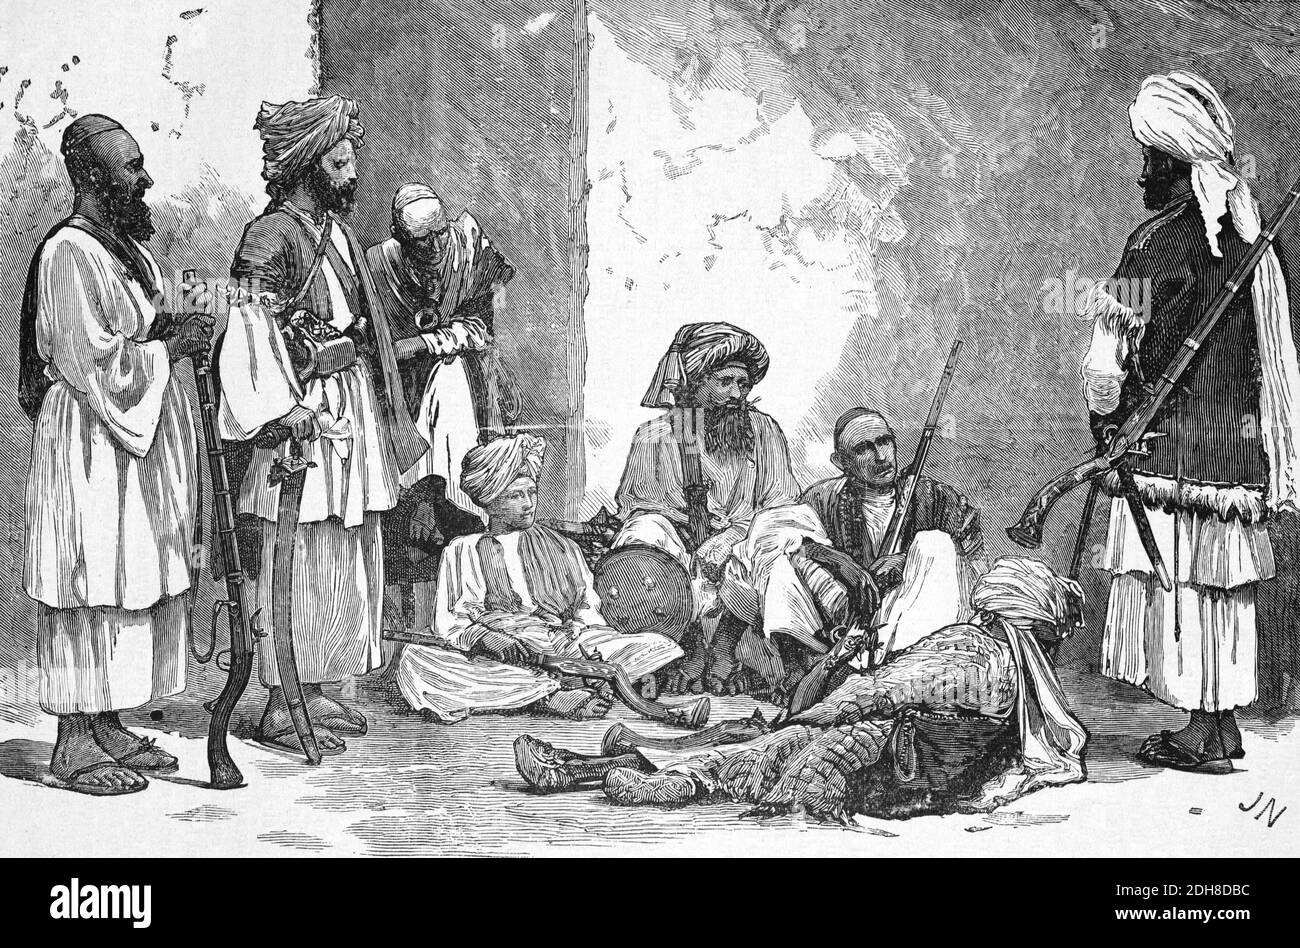 Gruppe afghanischer Assidis-Soldaten oder Mudschaheddin am Khyber-Pass Afghanistan (engr 1880) Vintage Illustration oder Gravur Stockfoto